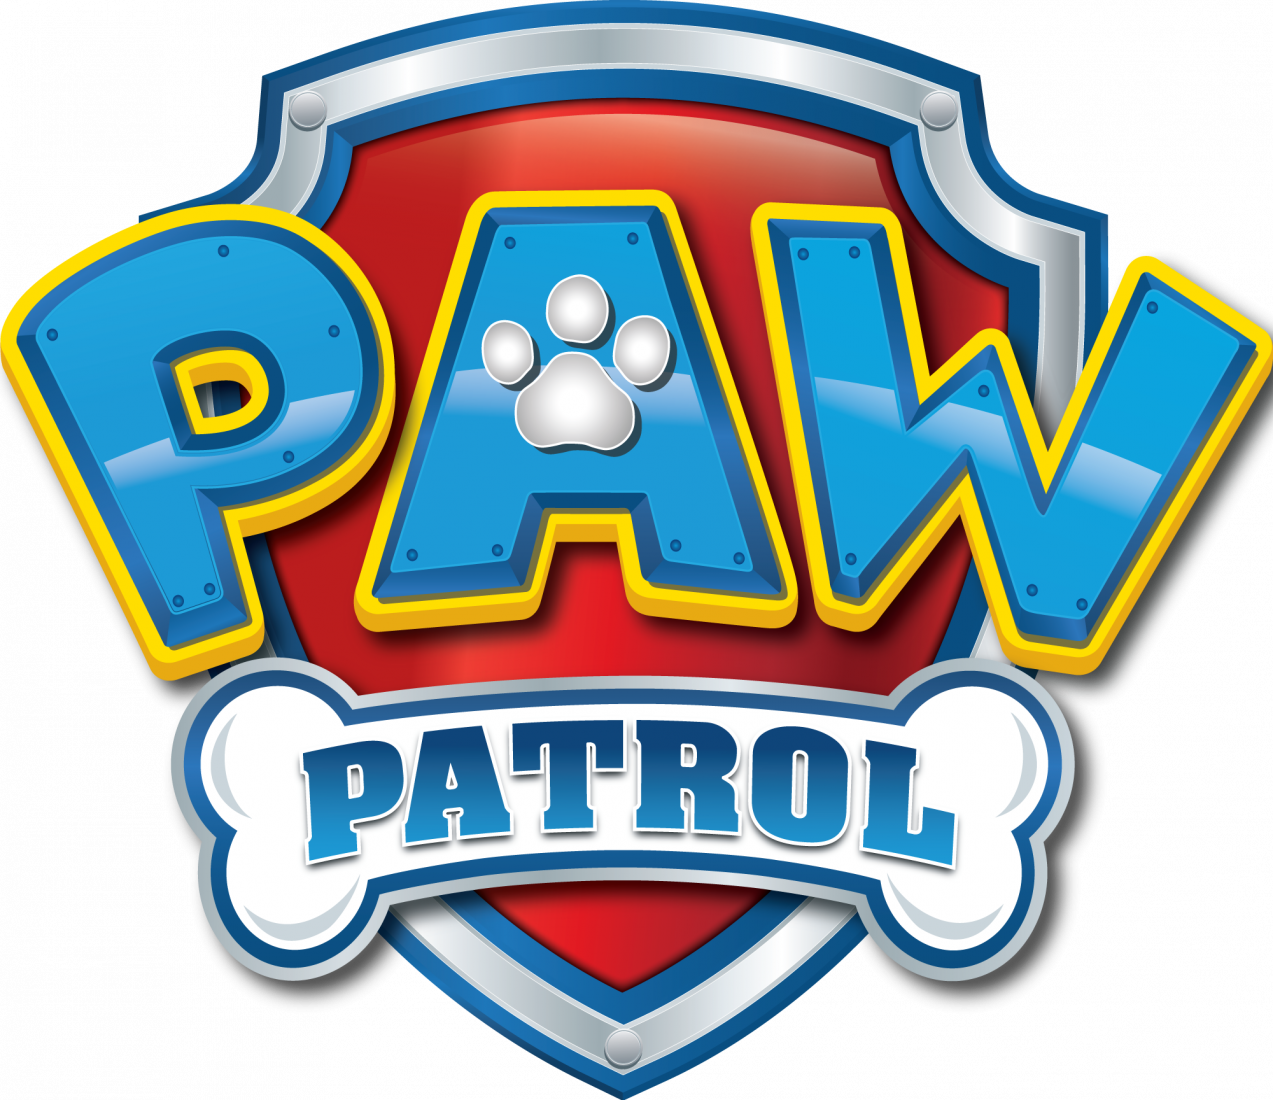 Paw patrol produkter